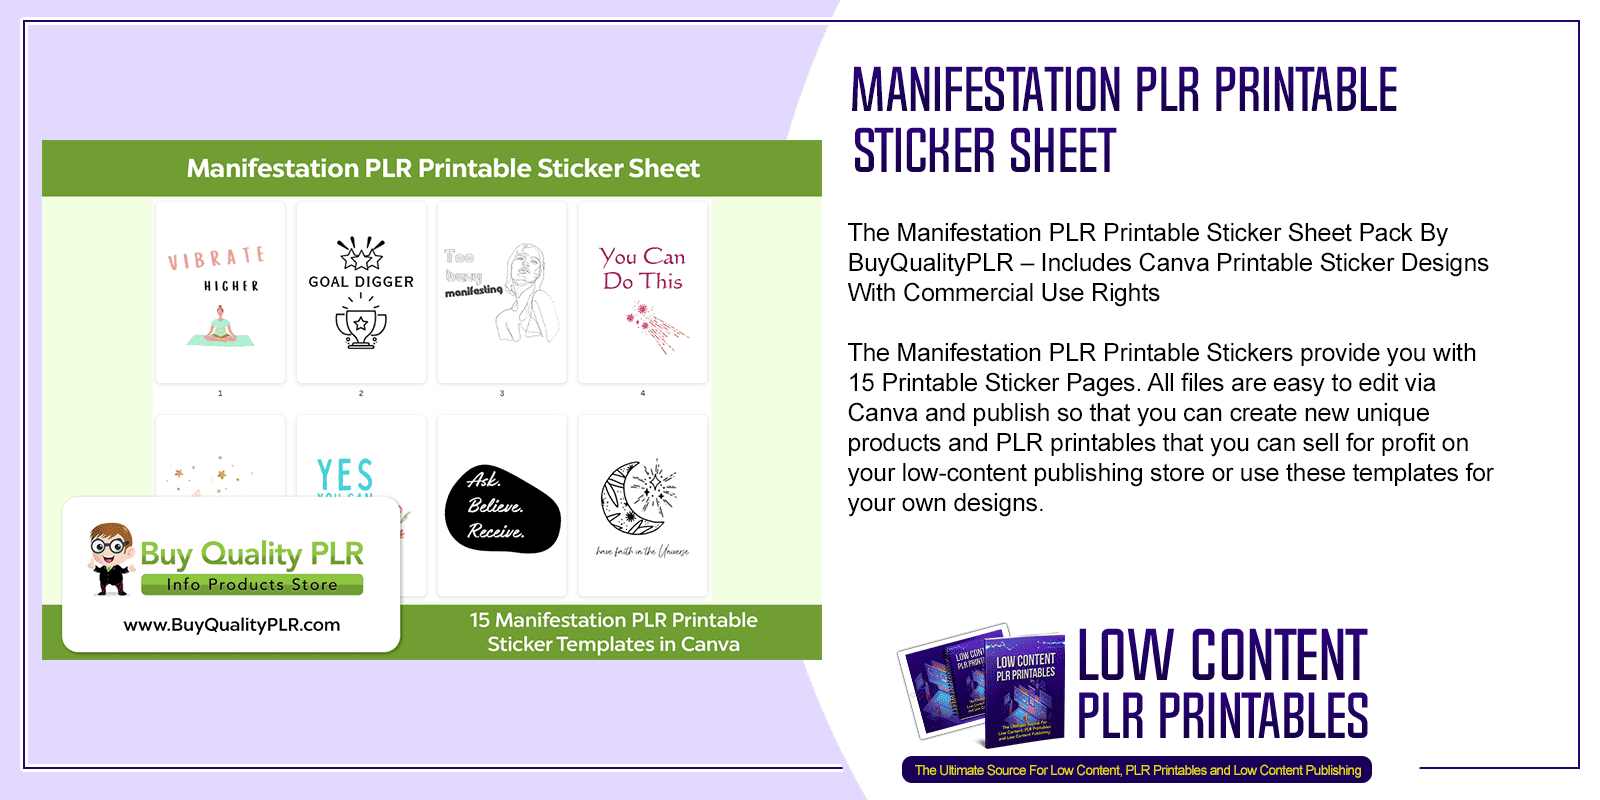 Manifestation PLR Printable Sticker Sheet